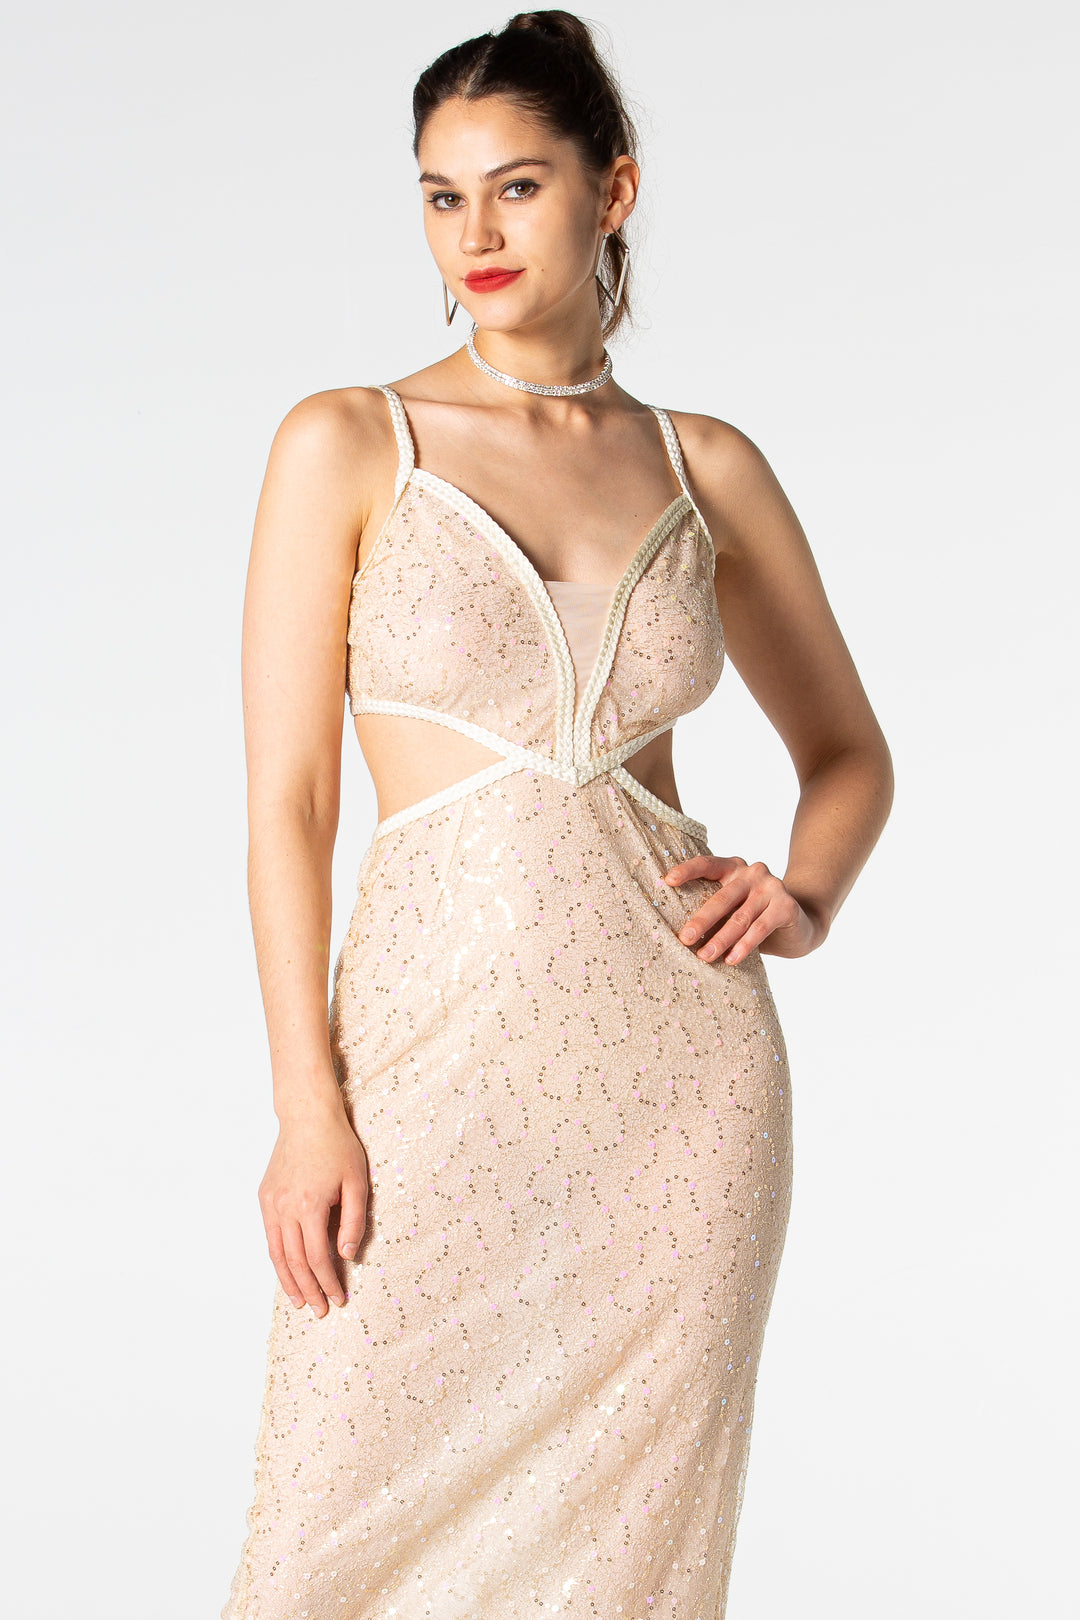 Sesidy-Iyla Mesh Sequin Long Dress-Women's Clothing Online Store